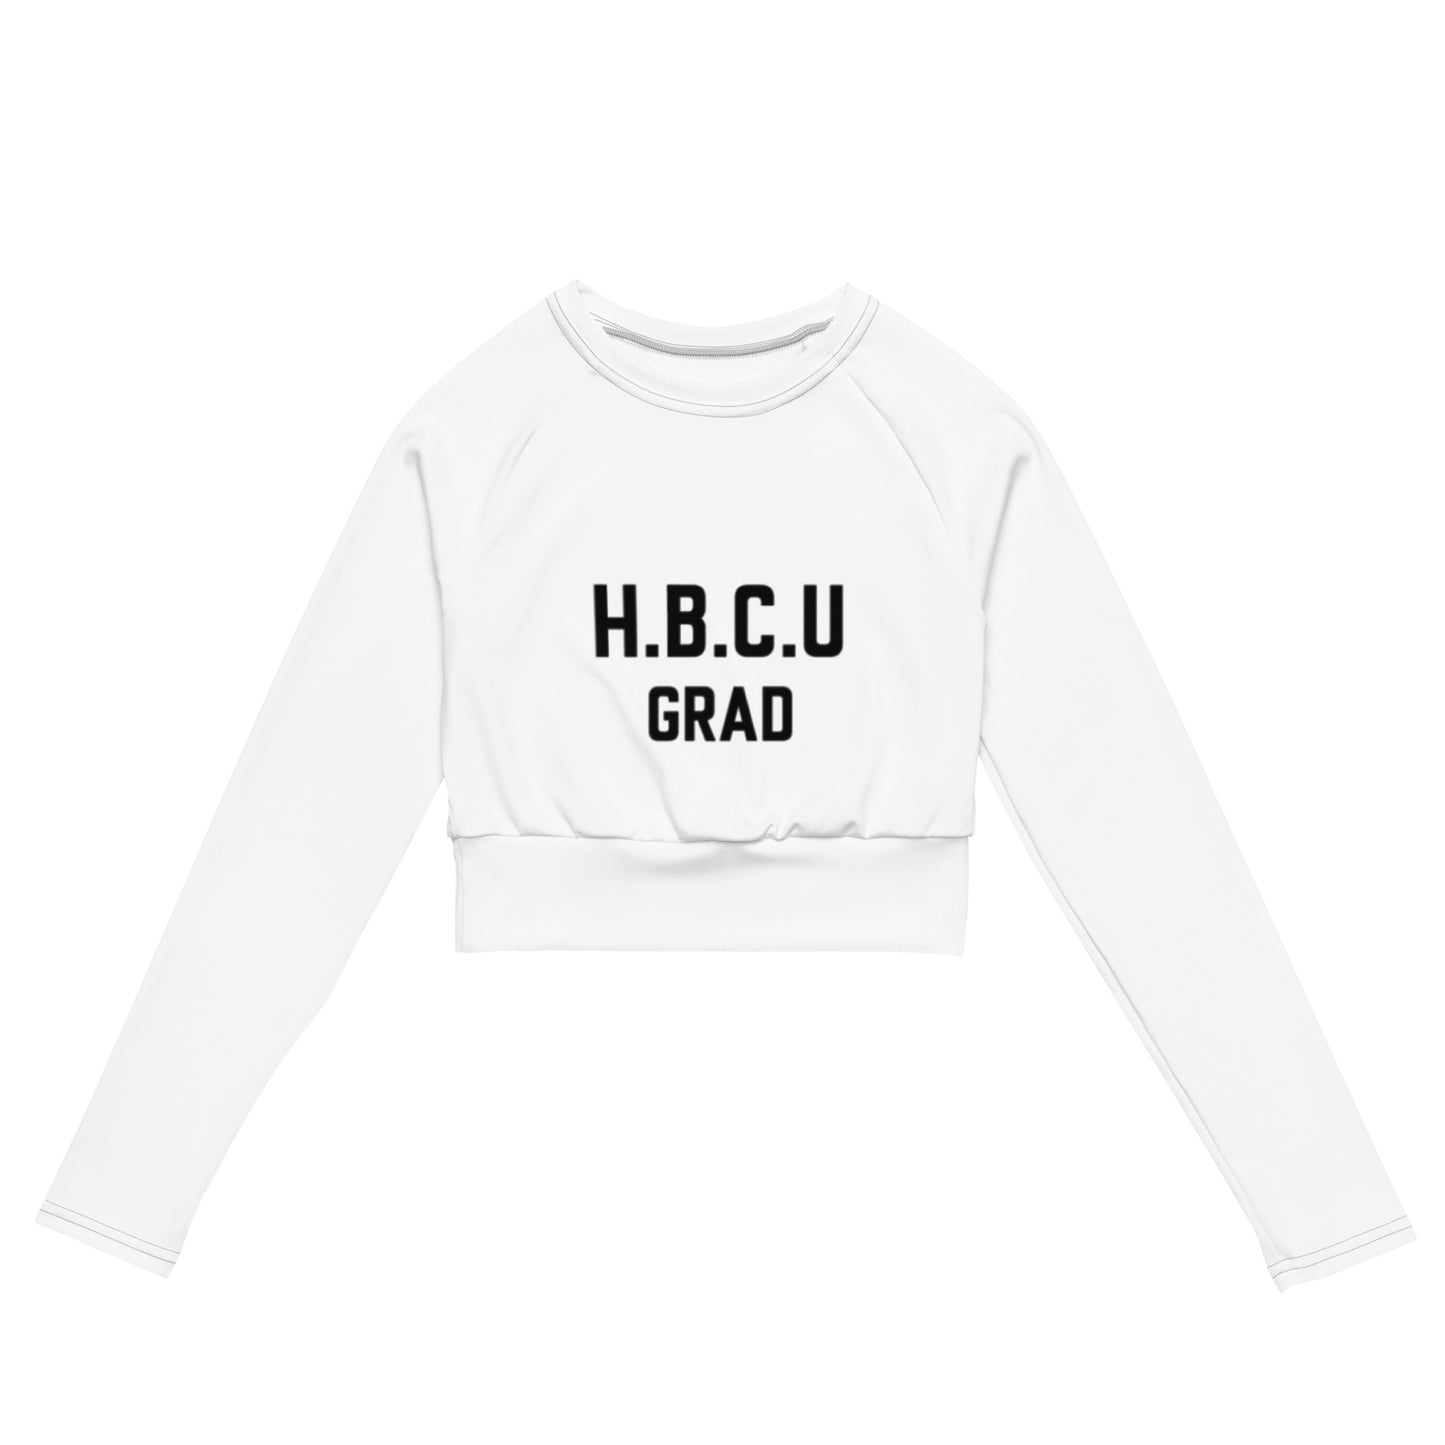 HBCU Grad - Long-sleeve Crop Top